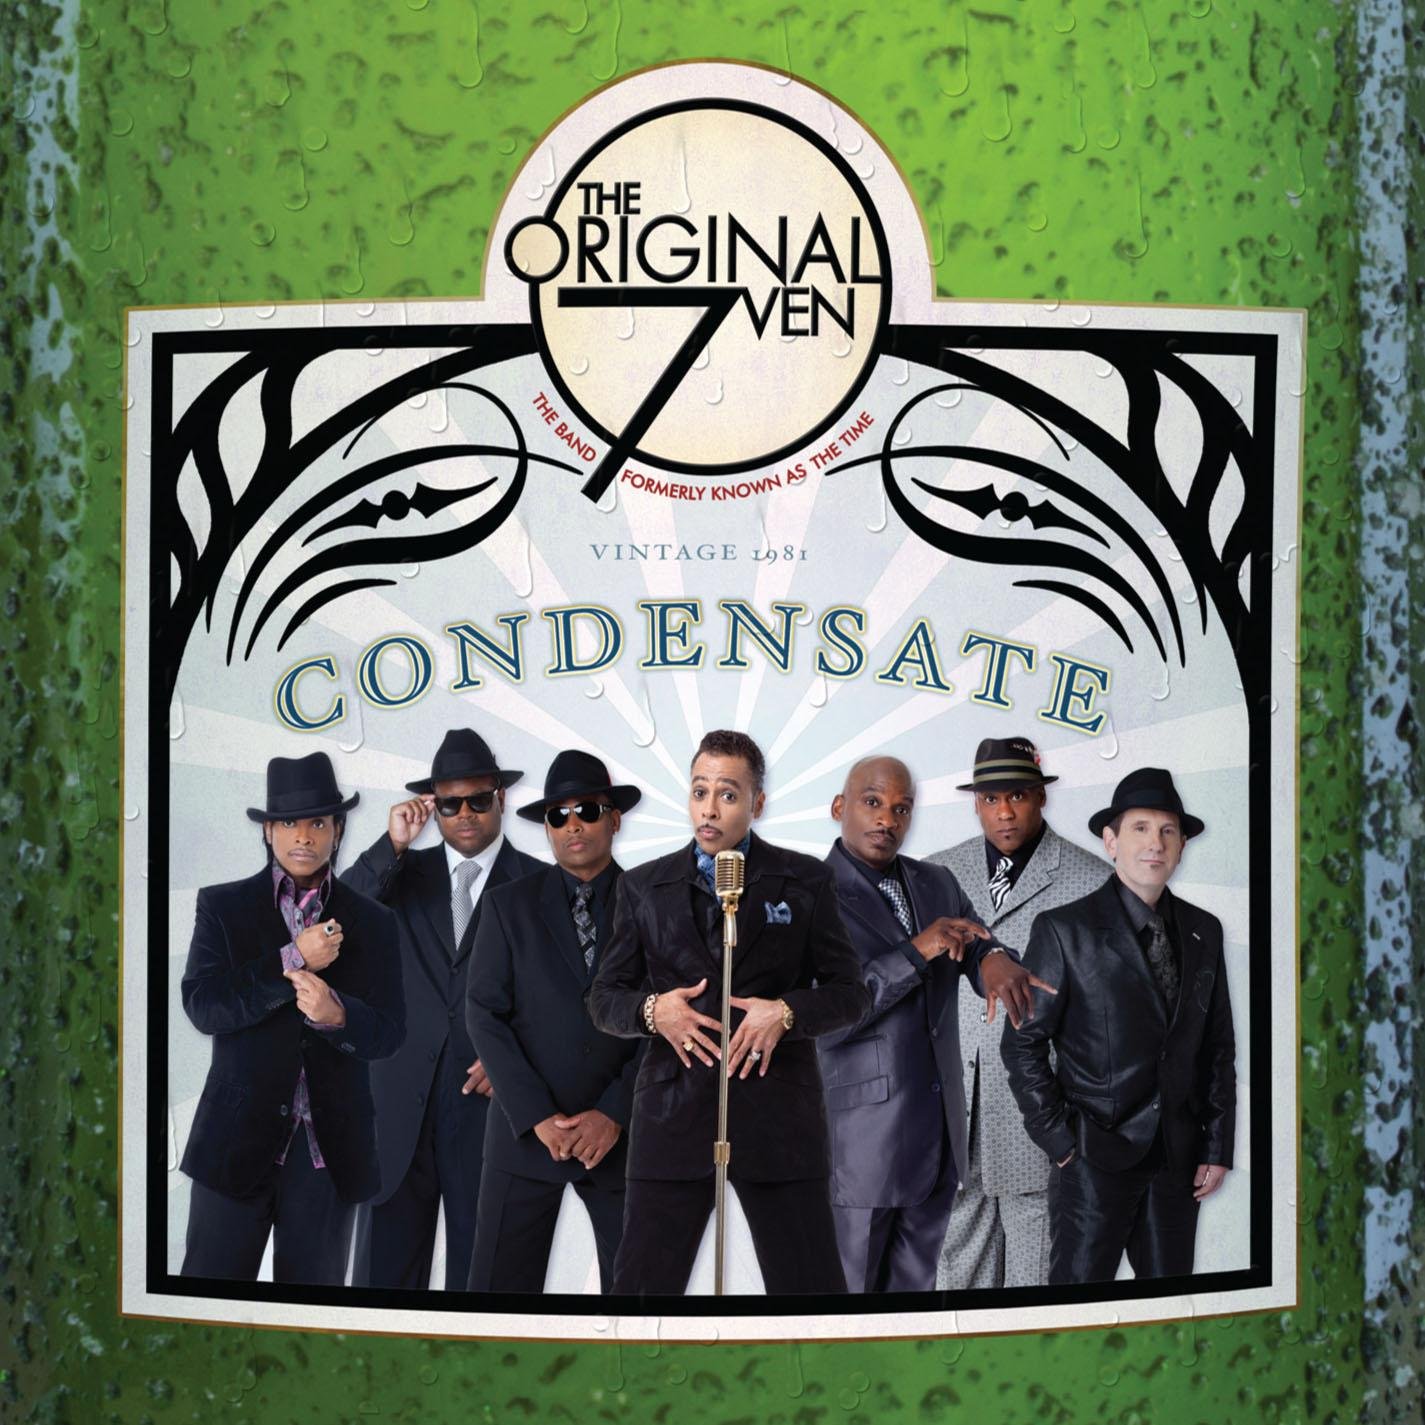 audio review : Condensation ( album ) ... The Original Seven